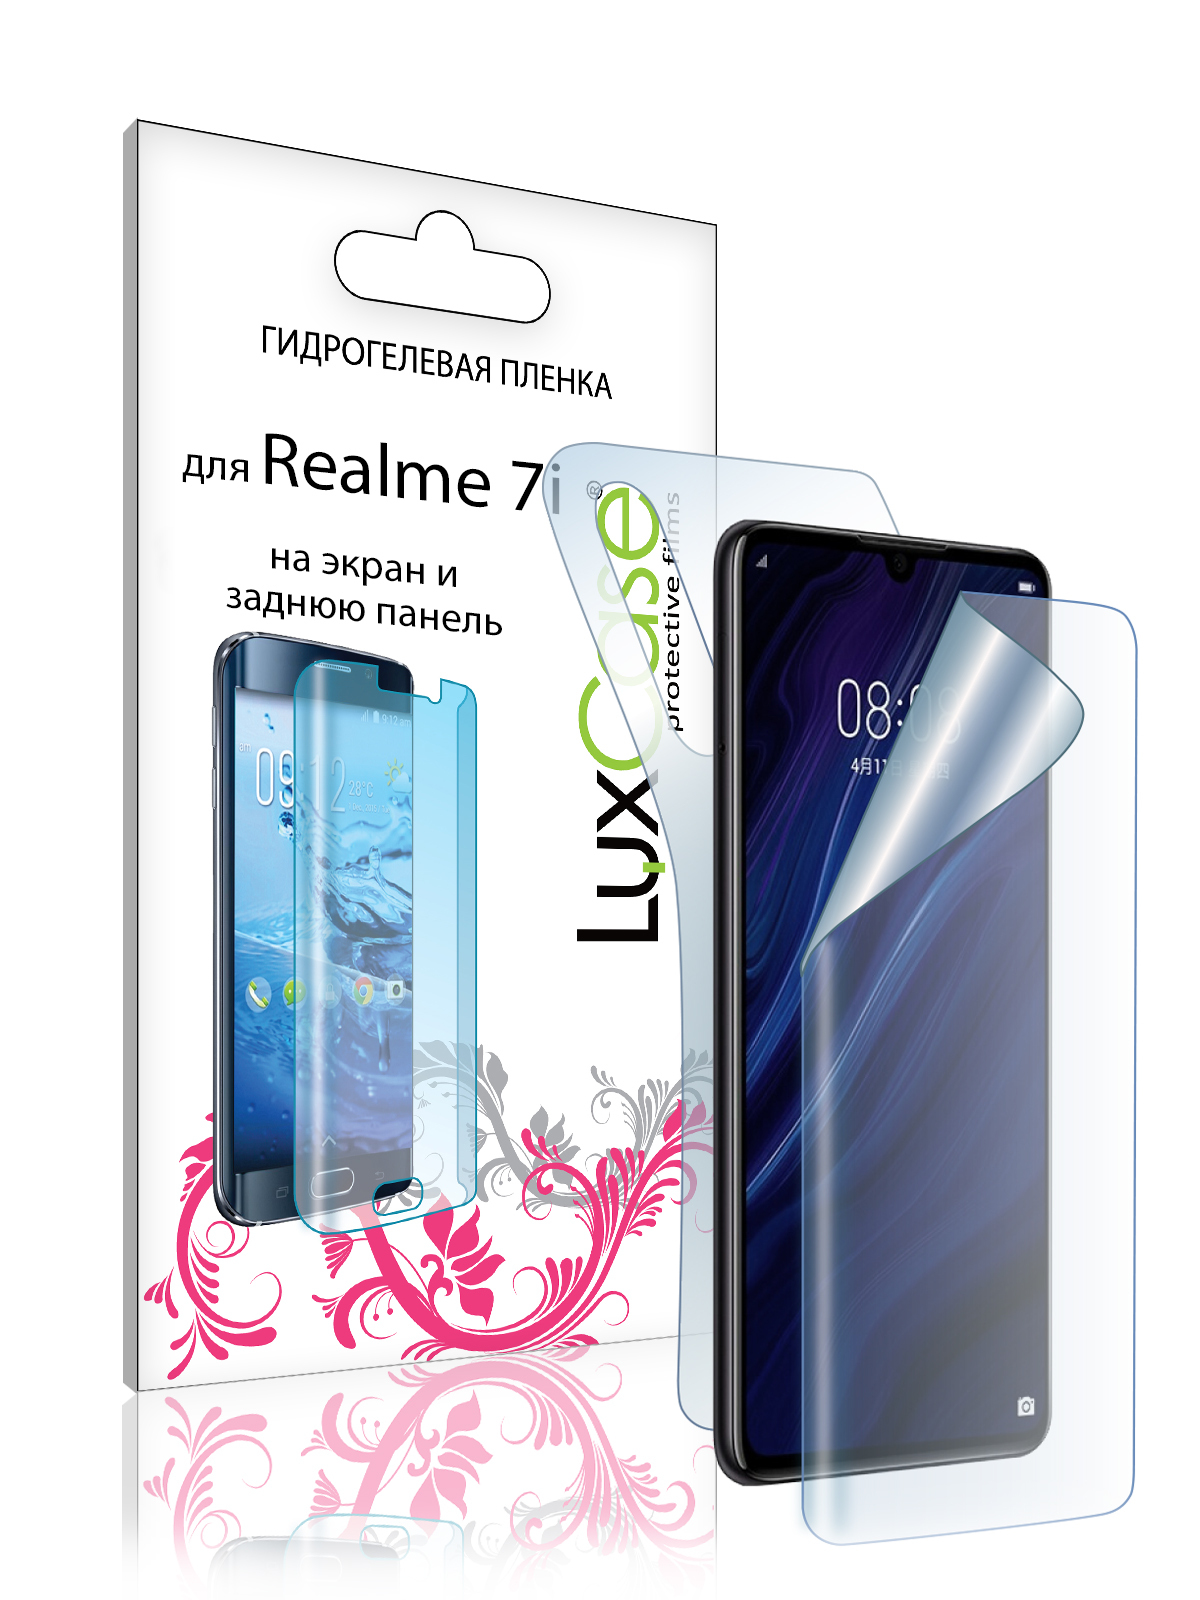 Пленка гидрогелевая LuxCase для Realme 7i 0.14mm Front and Back Transparent 86593 пленка гидрогелевая luxcase для realme 7i 0 14mm front transparent 86591